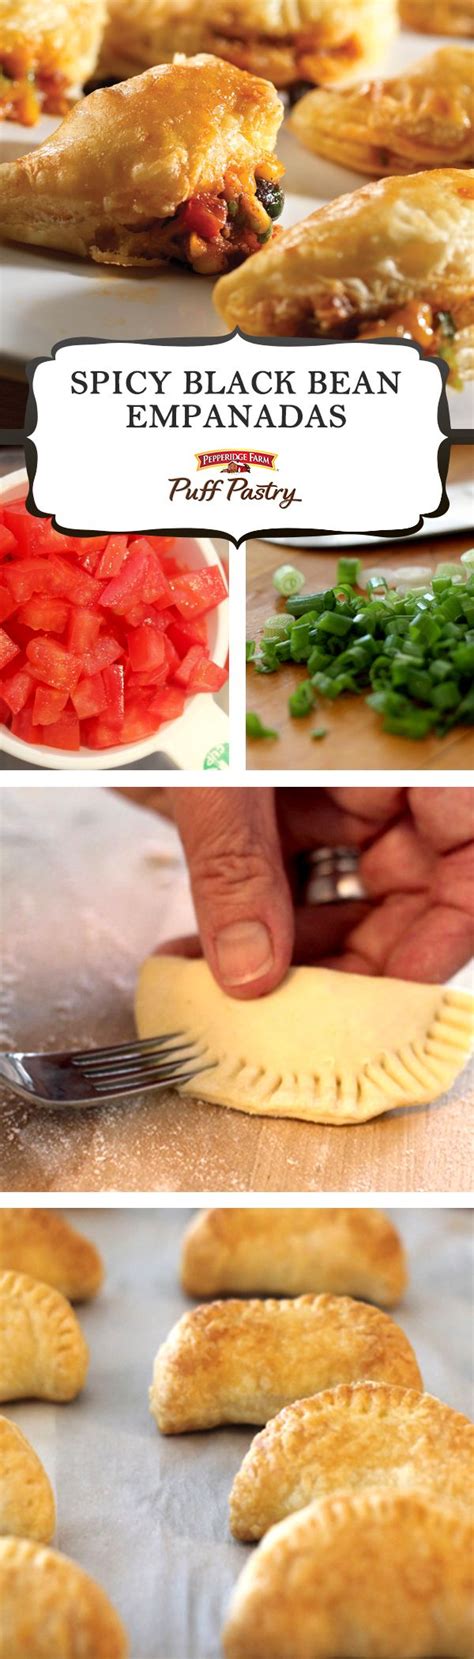 Spicy Black Bean Empanadas Recipe Recipes Food Cooking Recipes